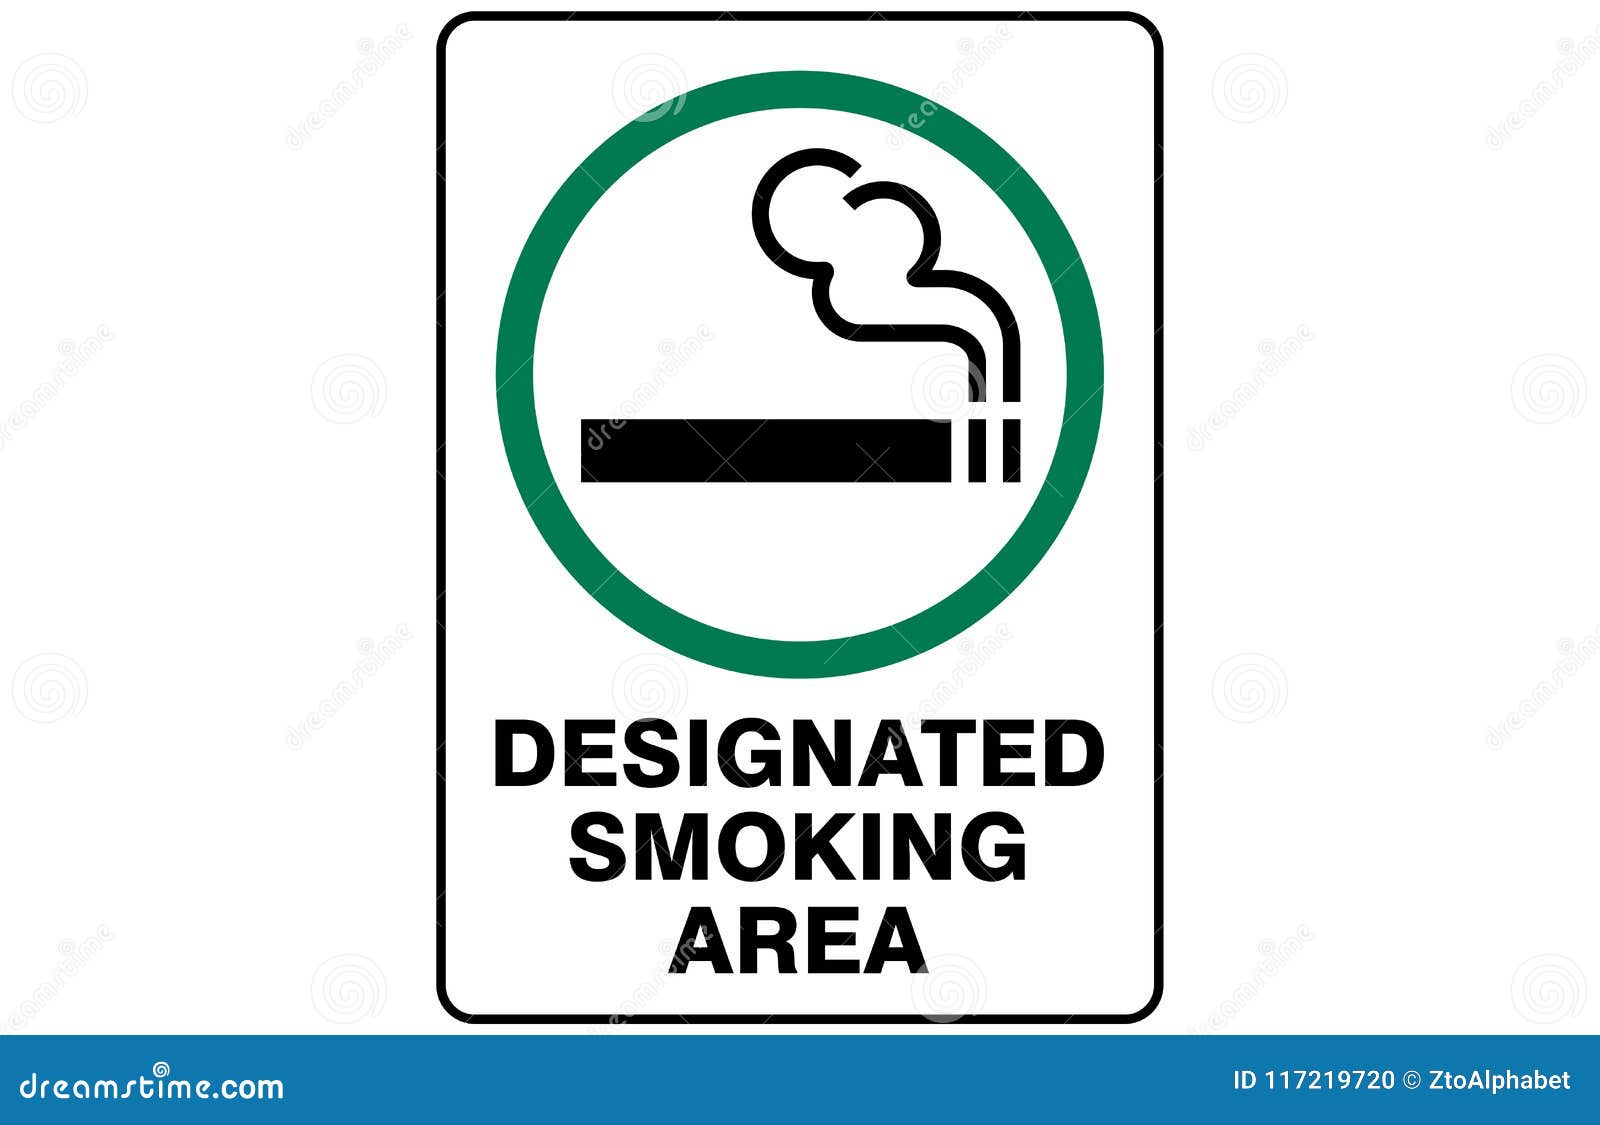 ated smoking area  sign 